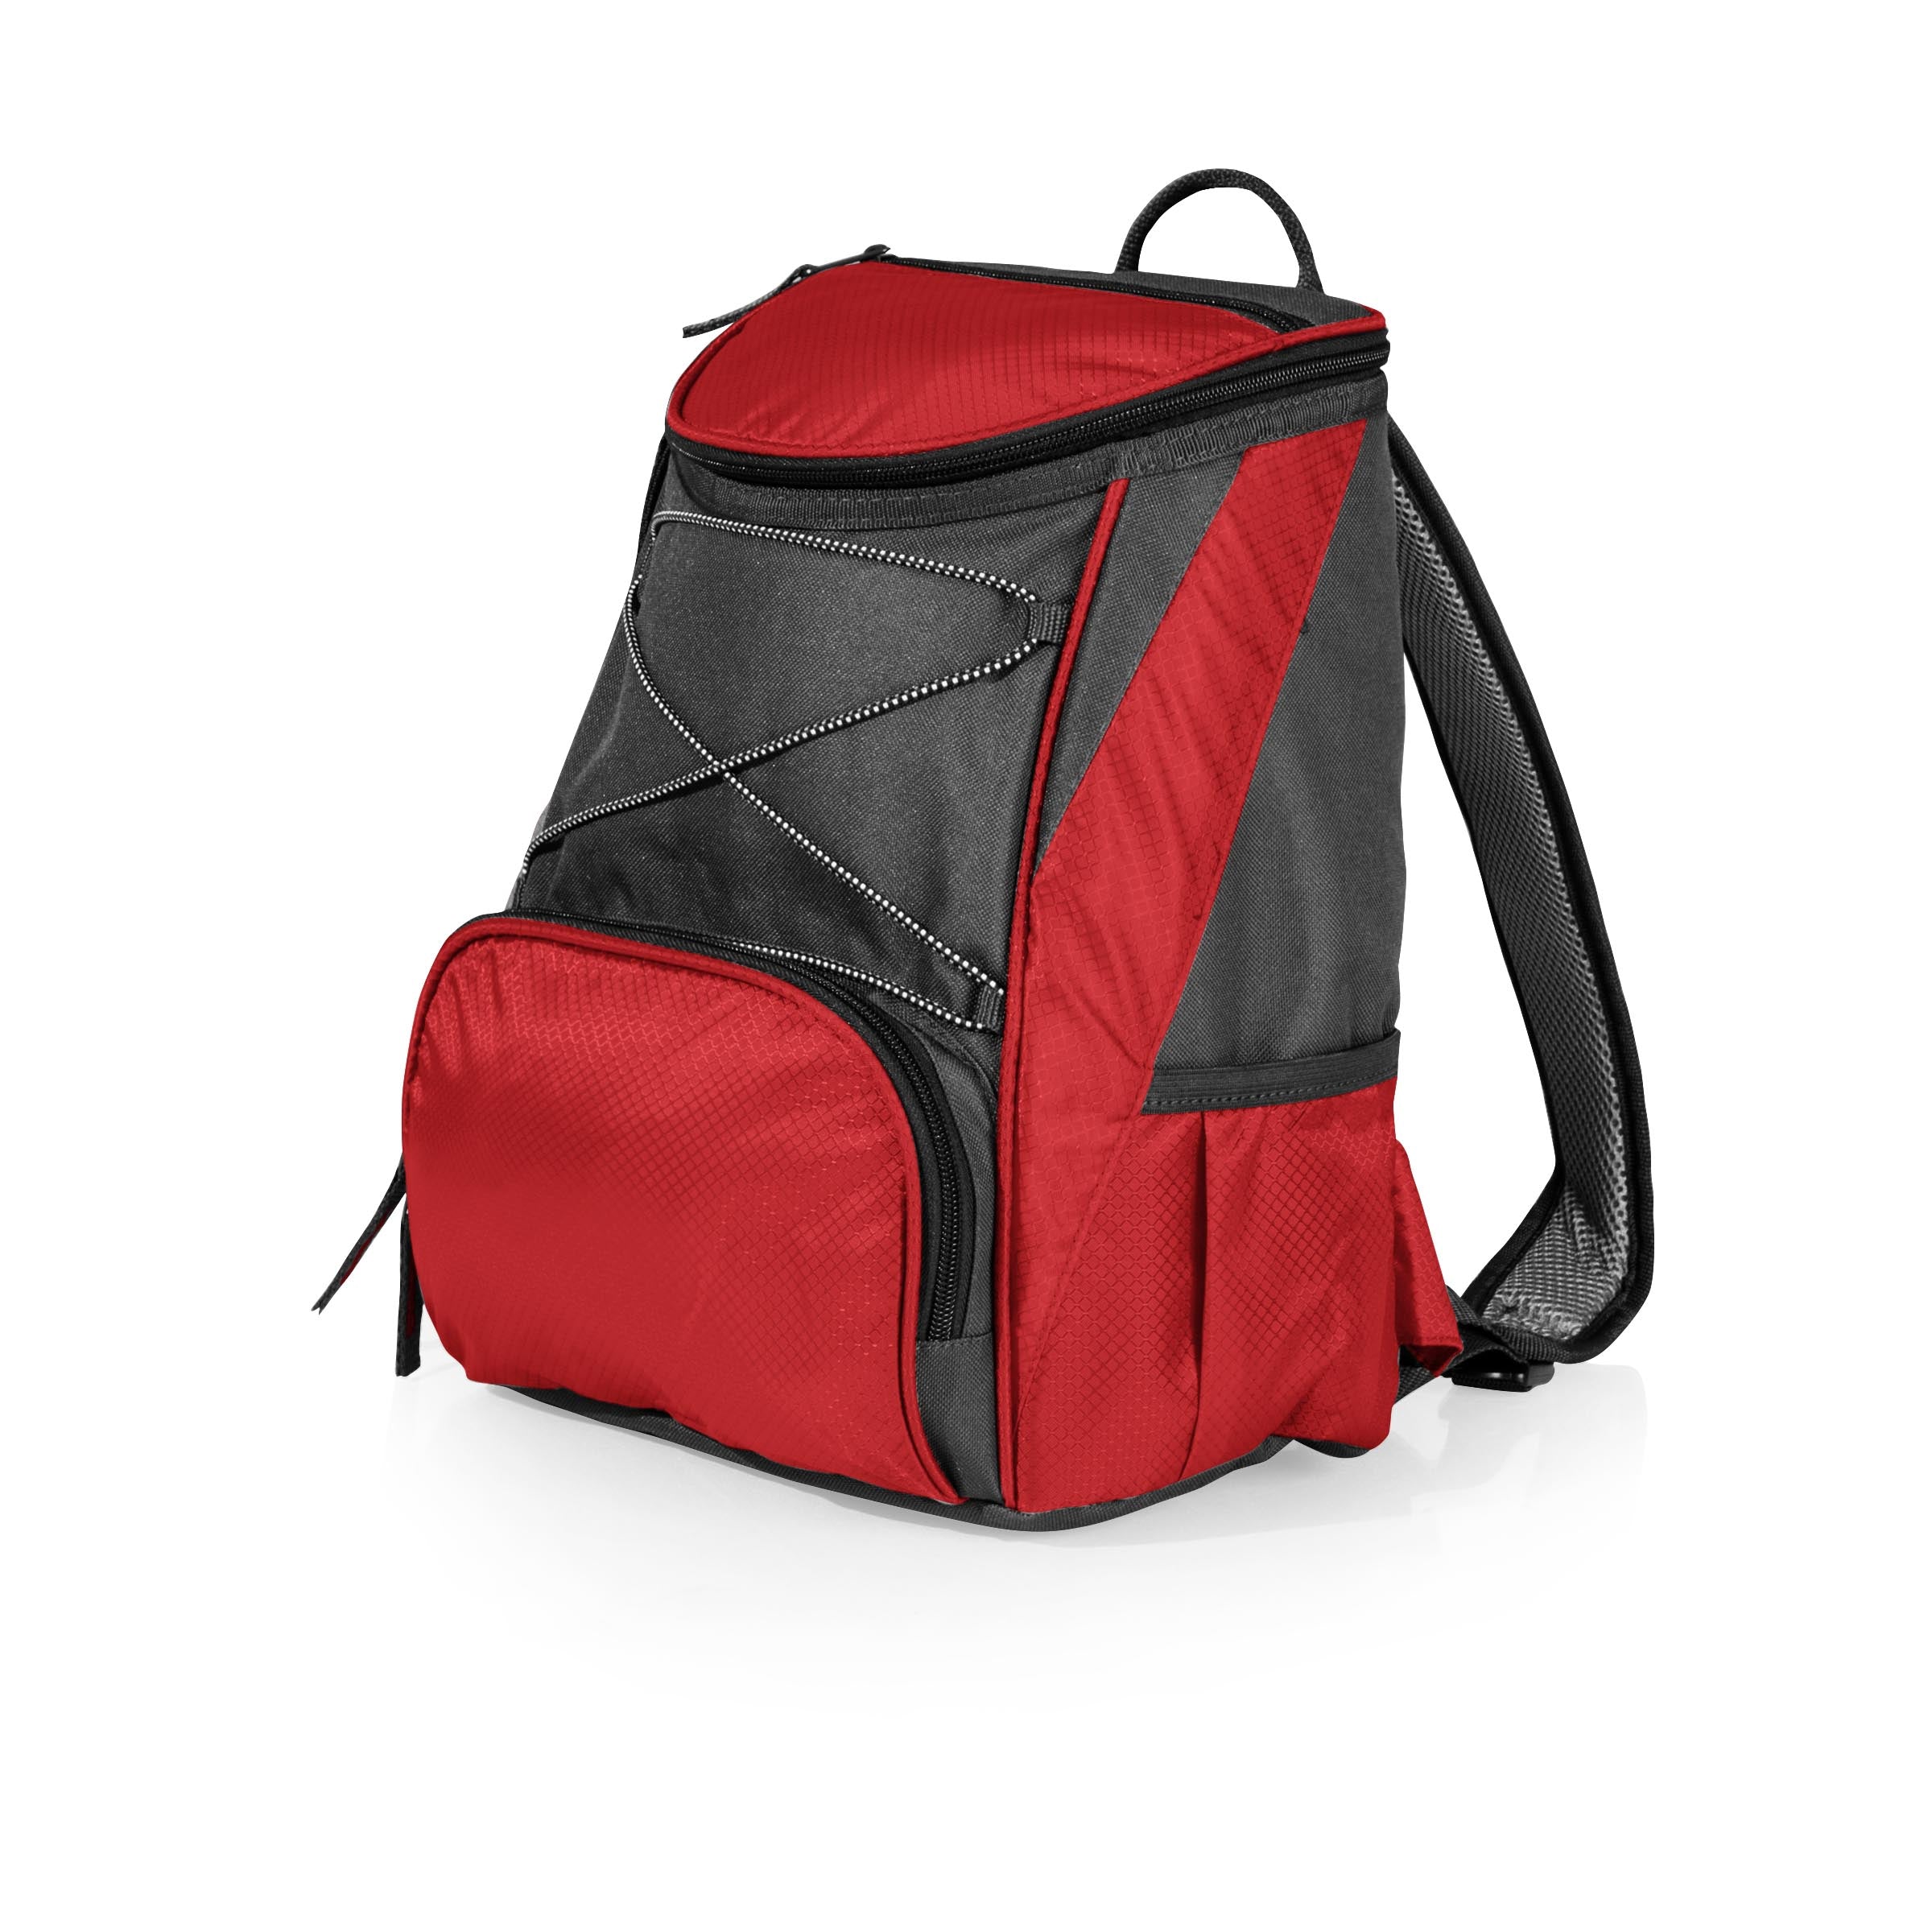 St. Louis Cardinals - PTX Backpack Cooler